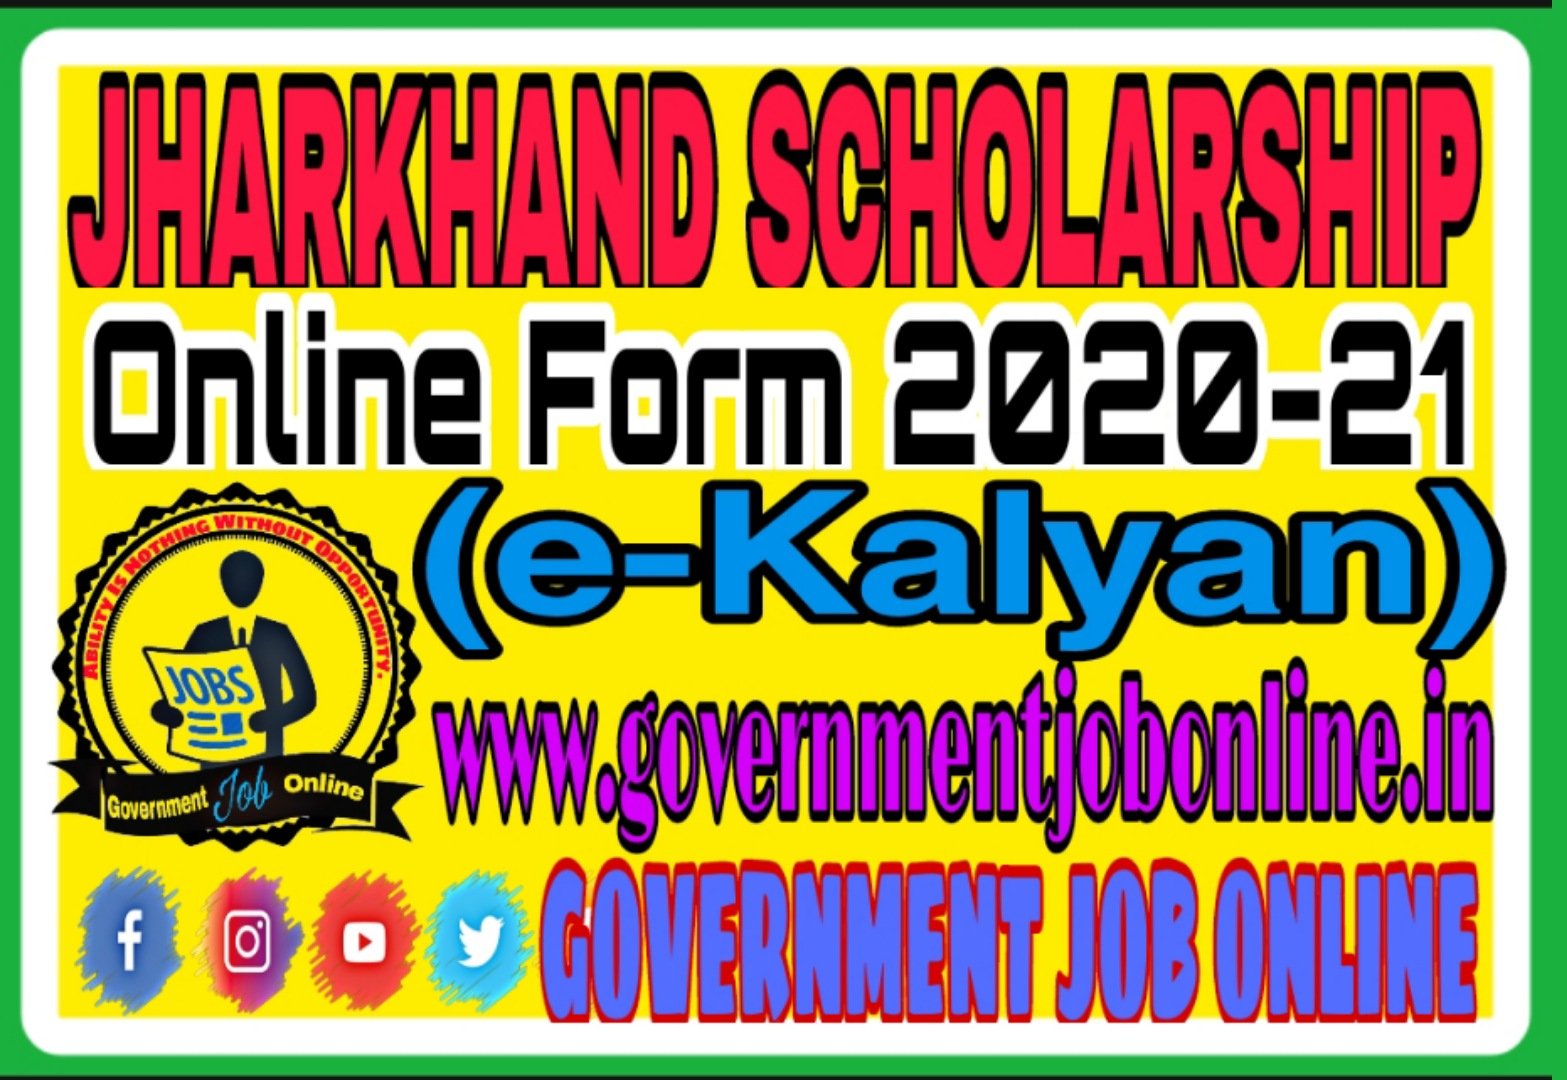 Jharkhand Scholarship Online Form 2020-21